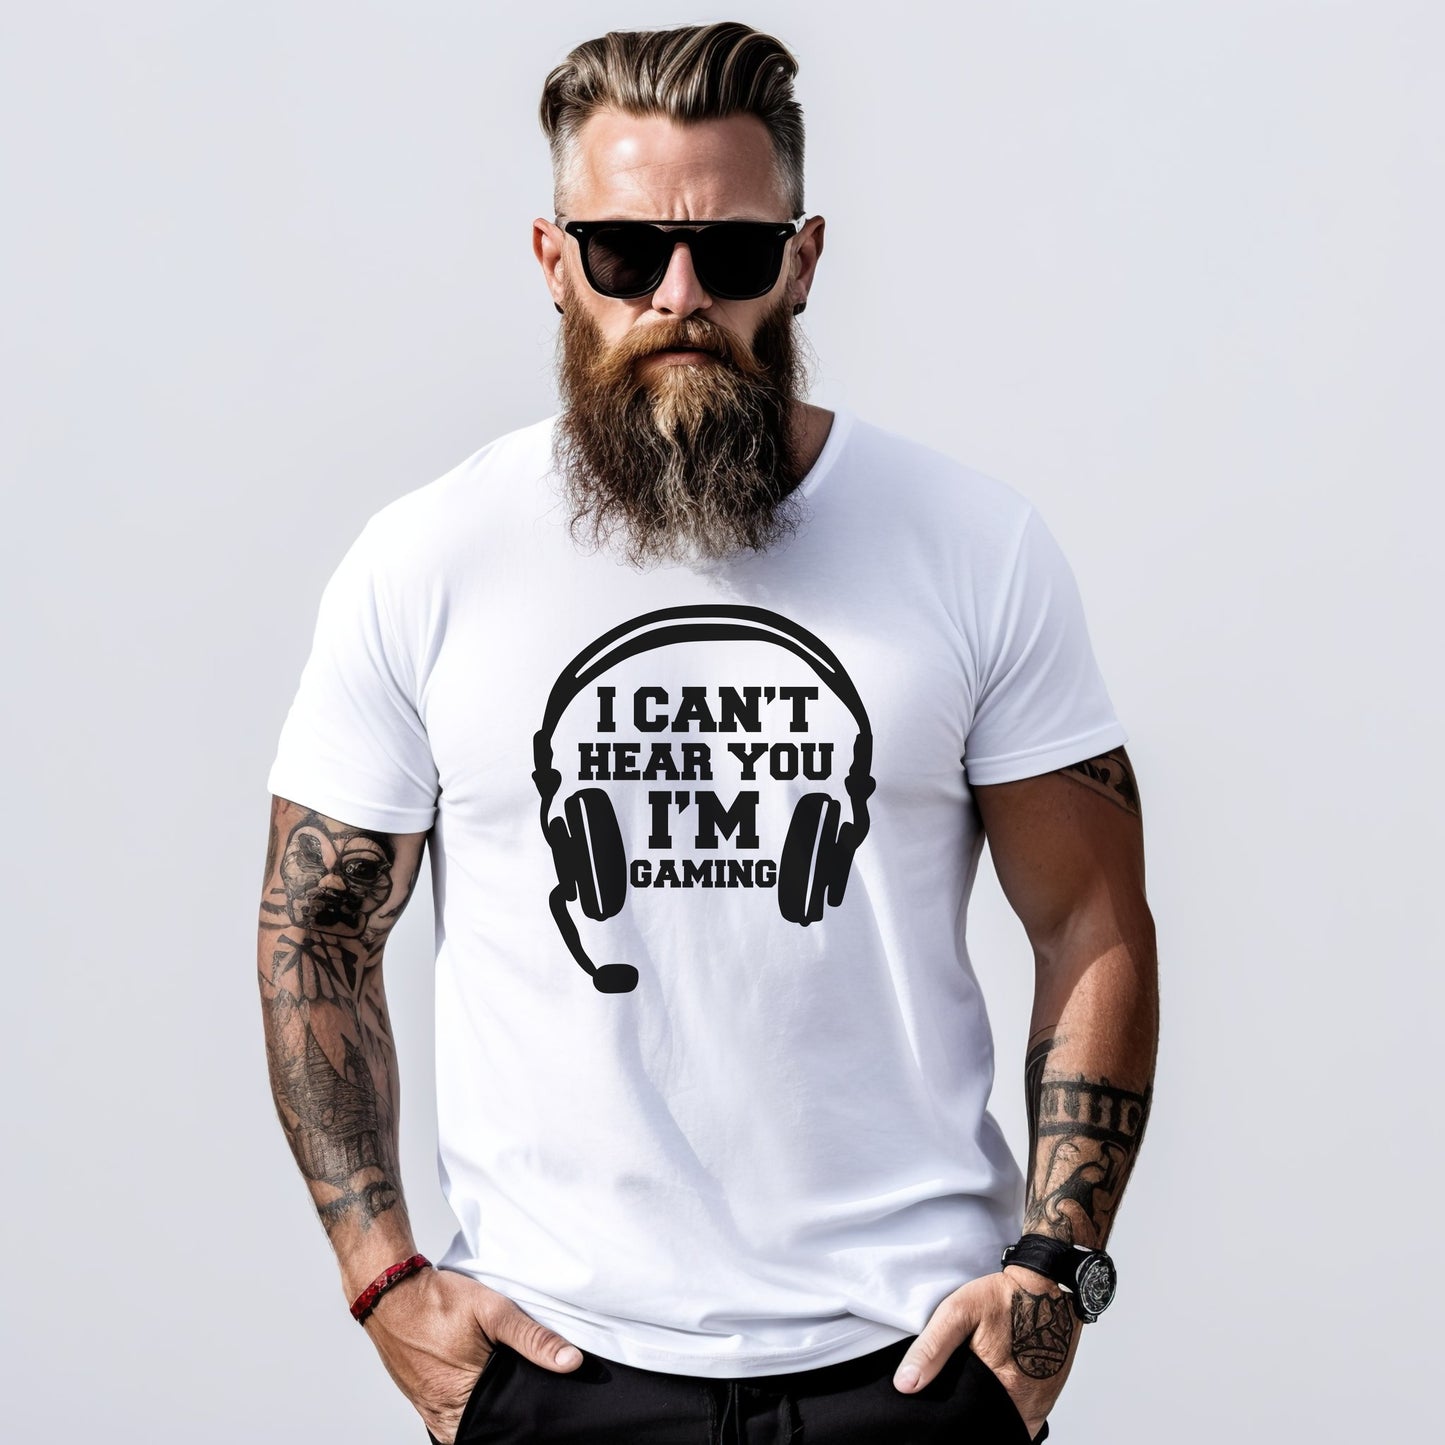 Organic Cotton Unisex T-Shirt: I can't hear you, i'm gaming